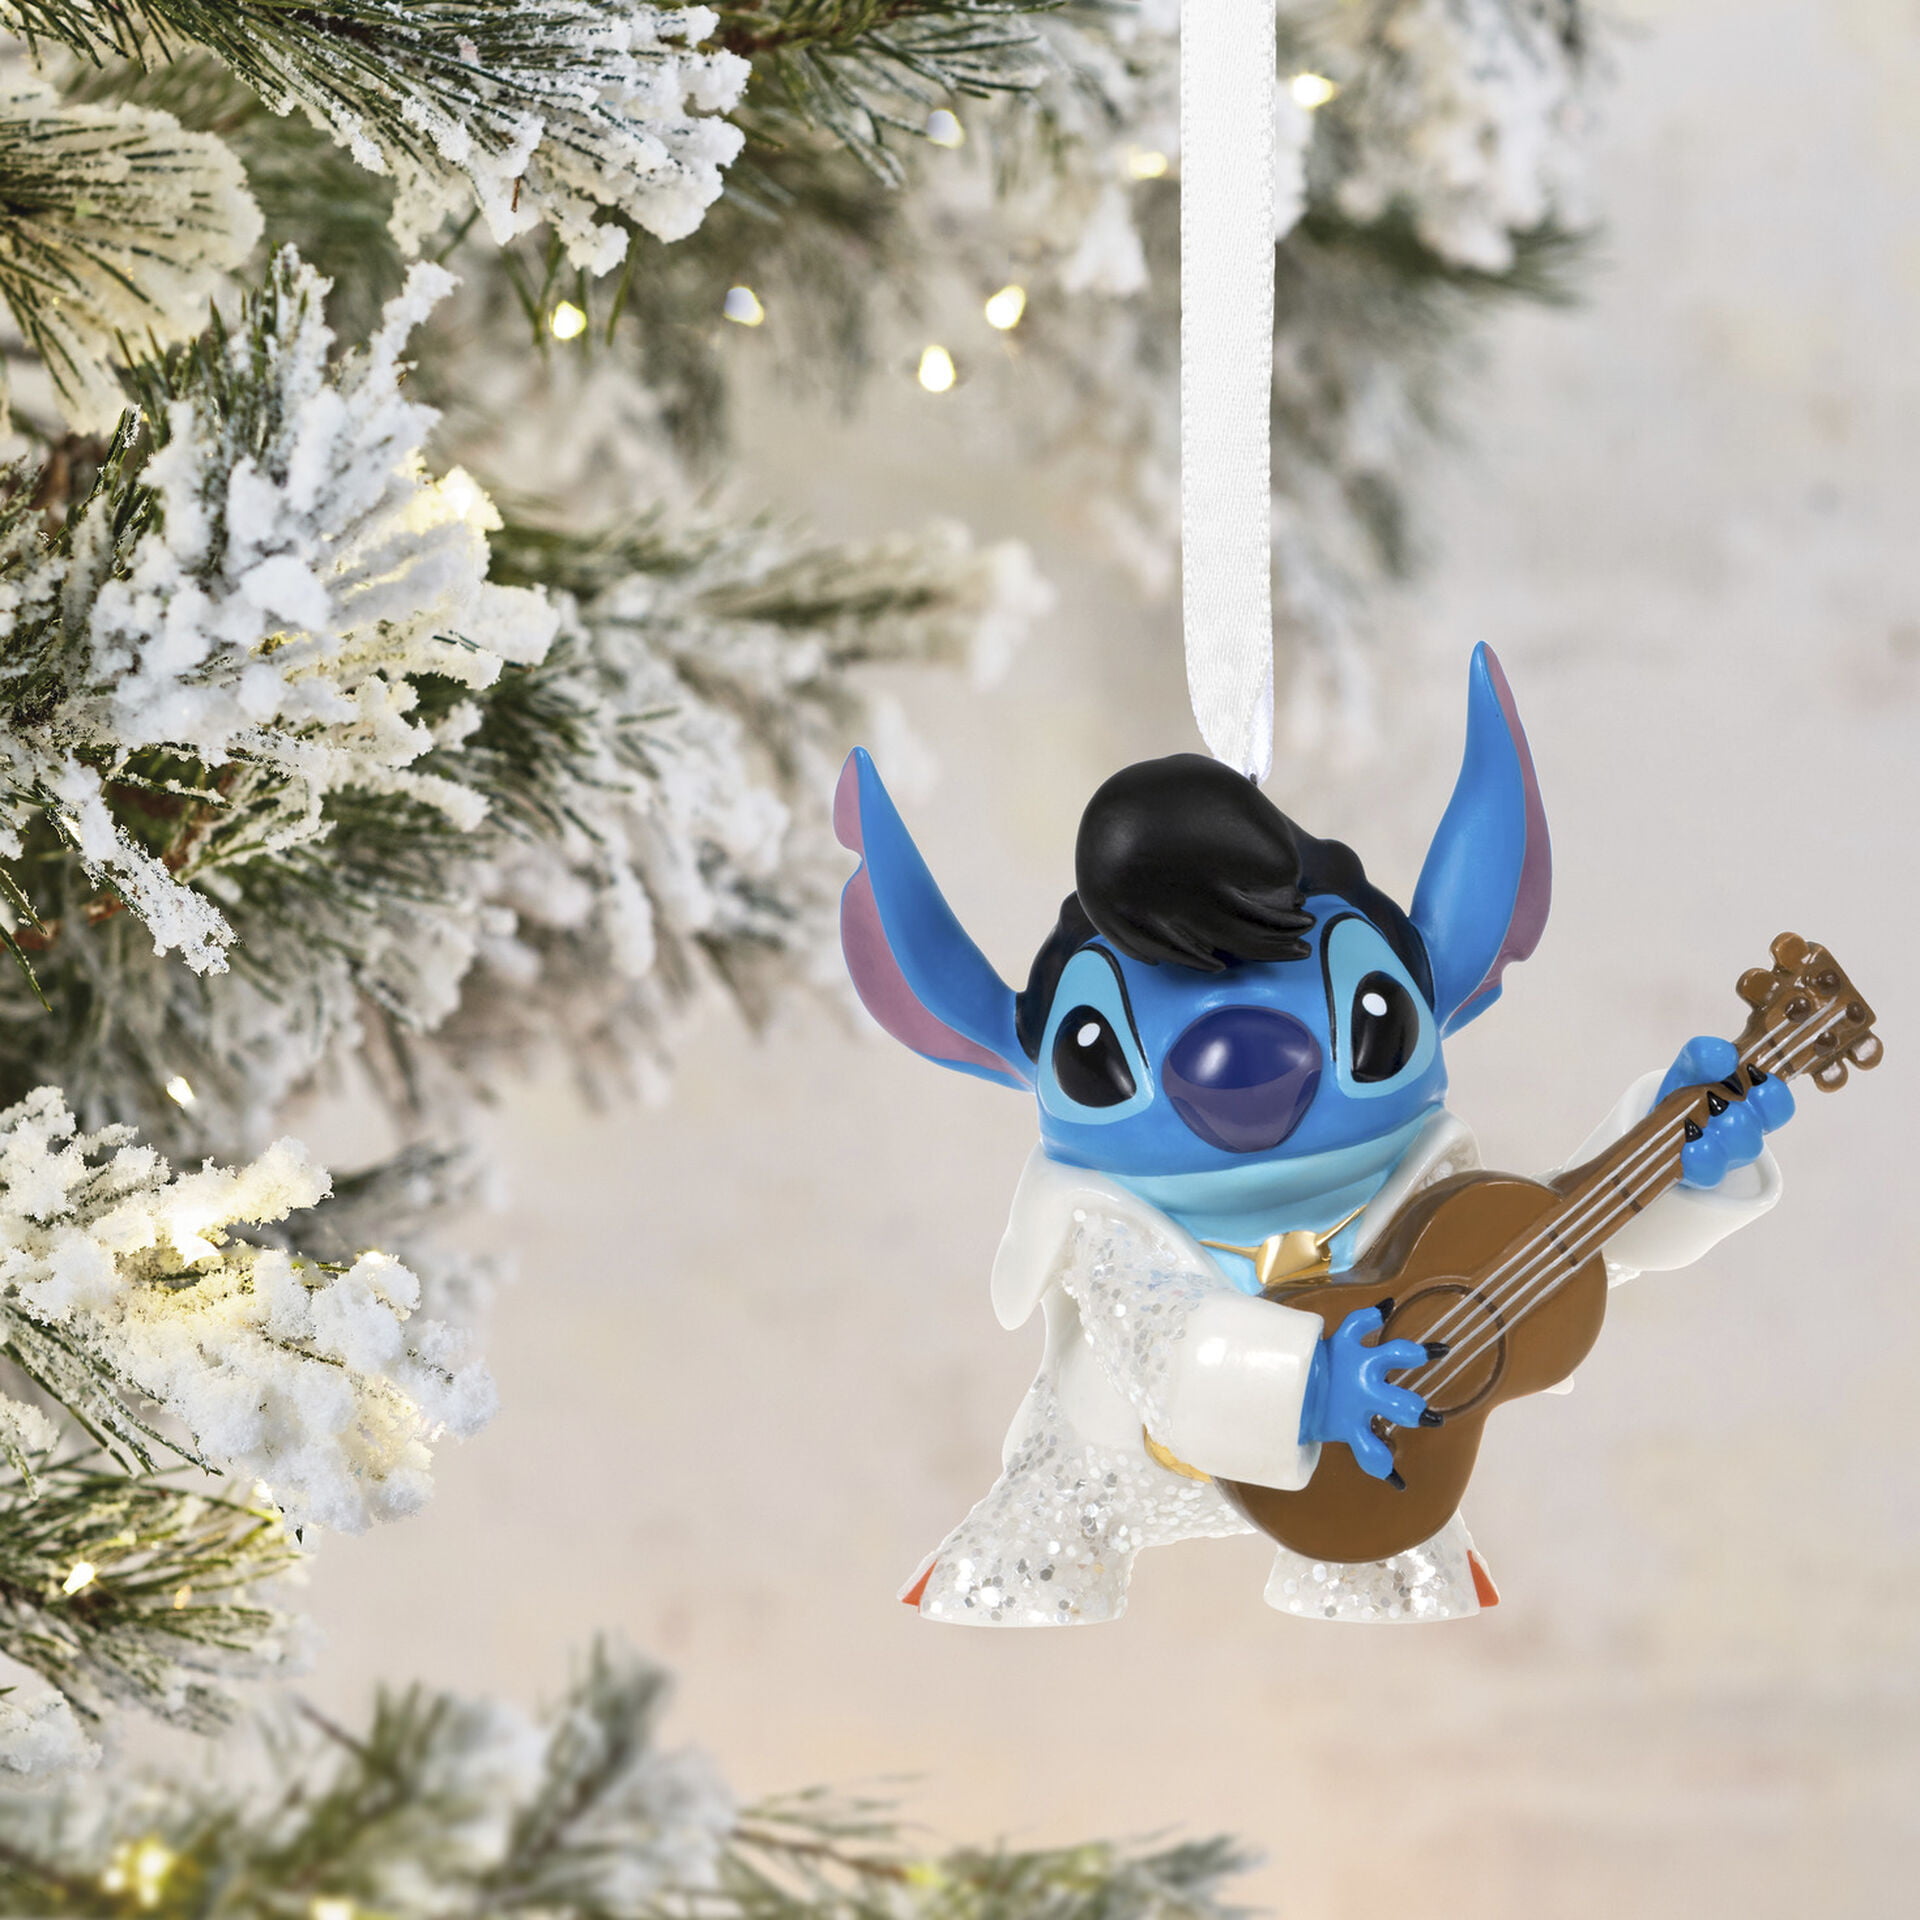 Stitch Have A Ohana Christmas Ornament - Growkoc